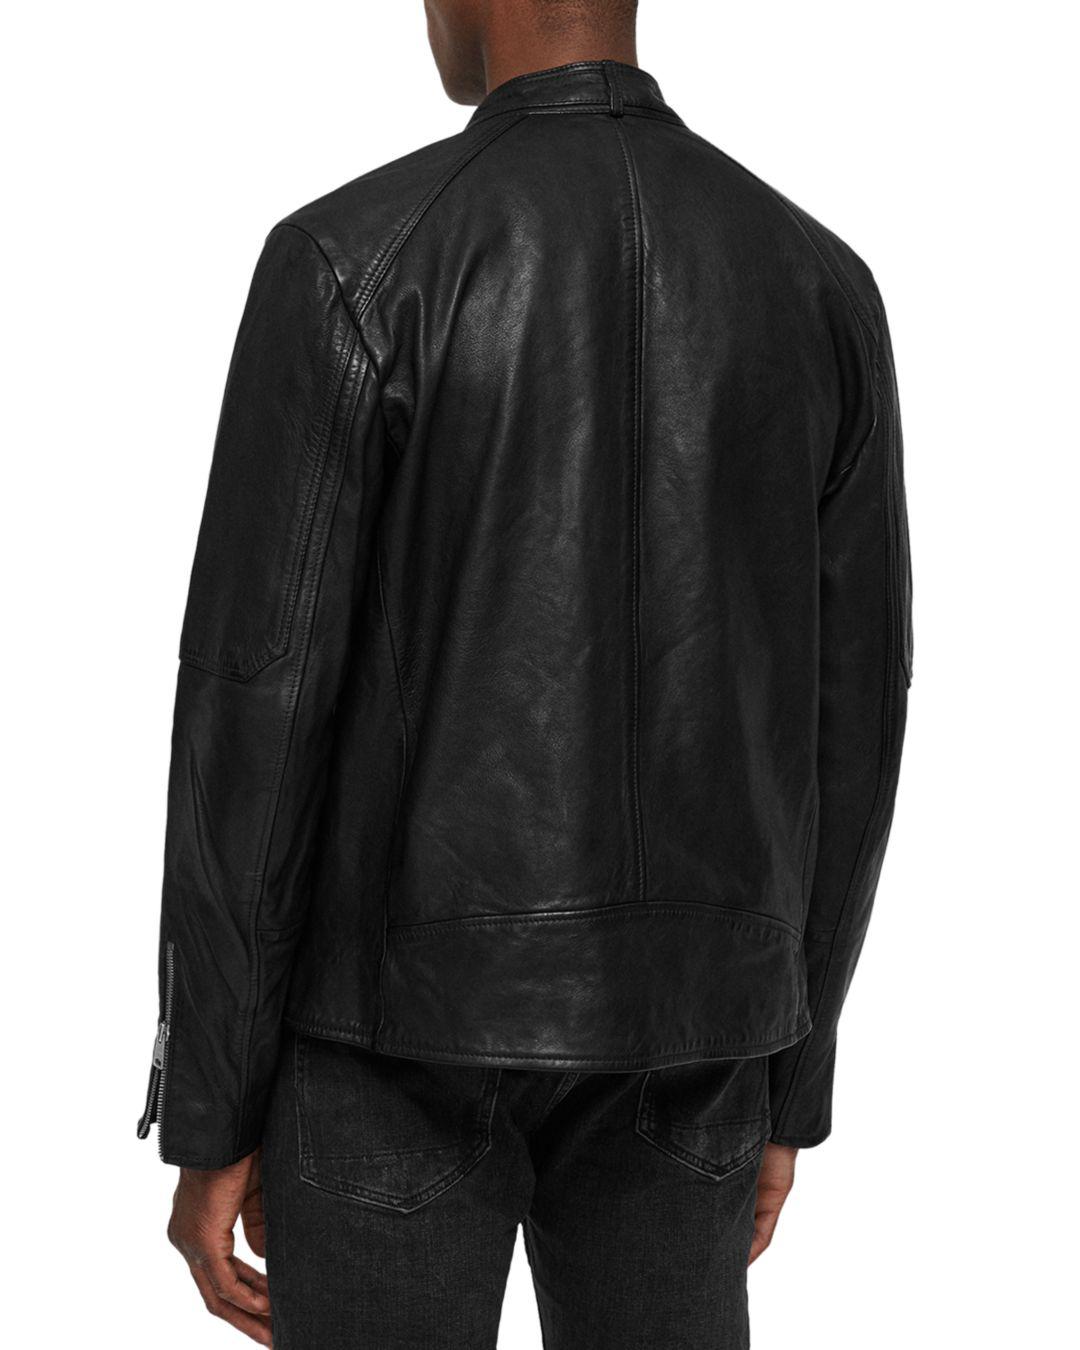 AllSaints Cora Leather Moto Jacket in Black for Men - Lyst